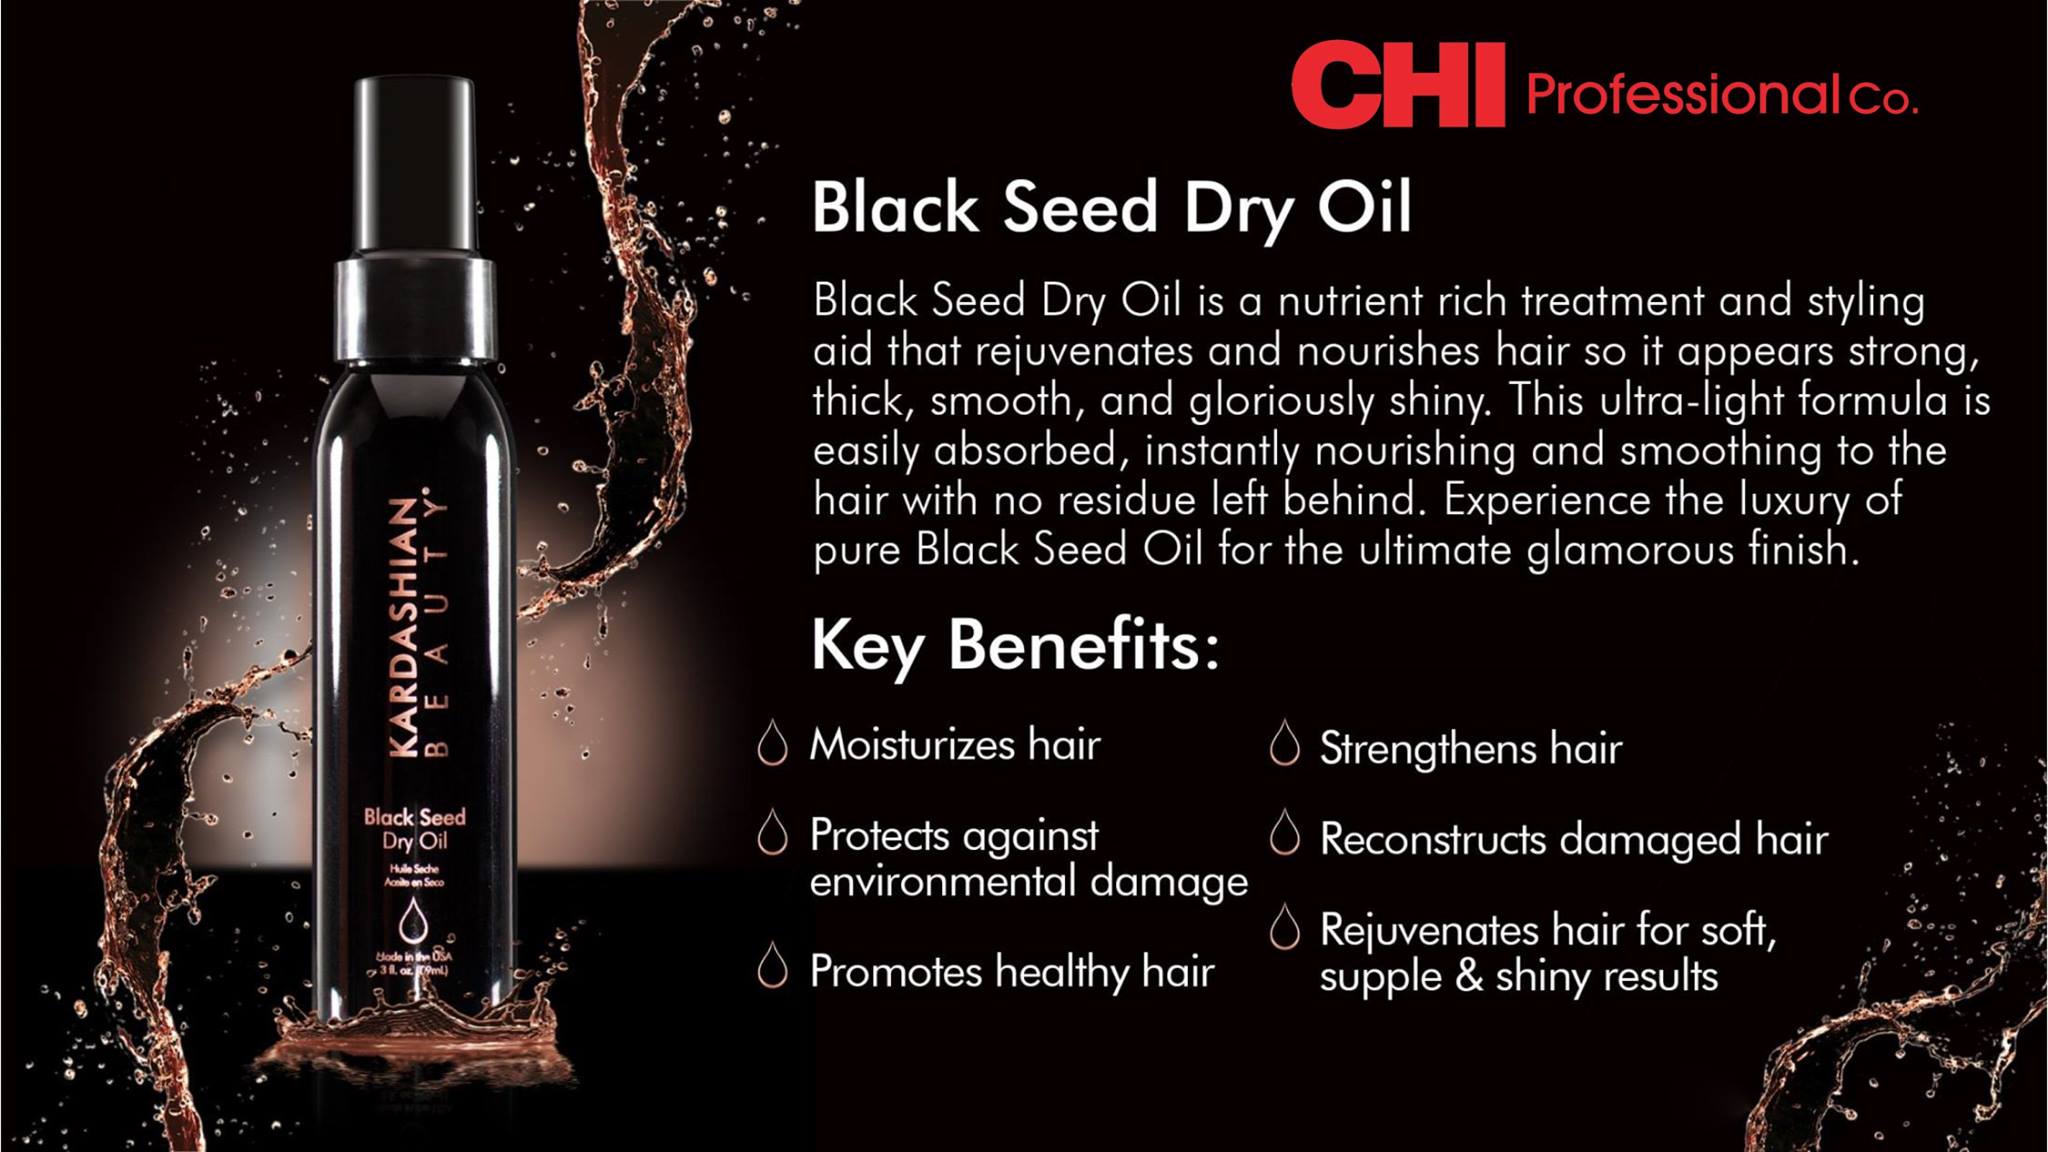 Luxury Black Seed Dry Oil